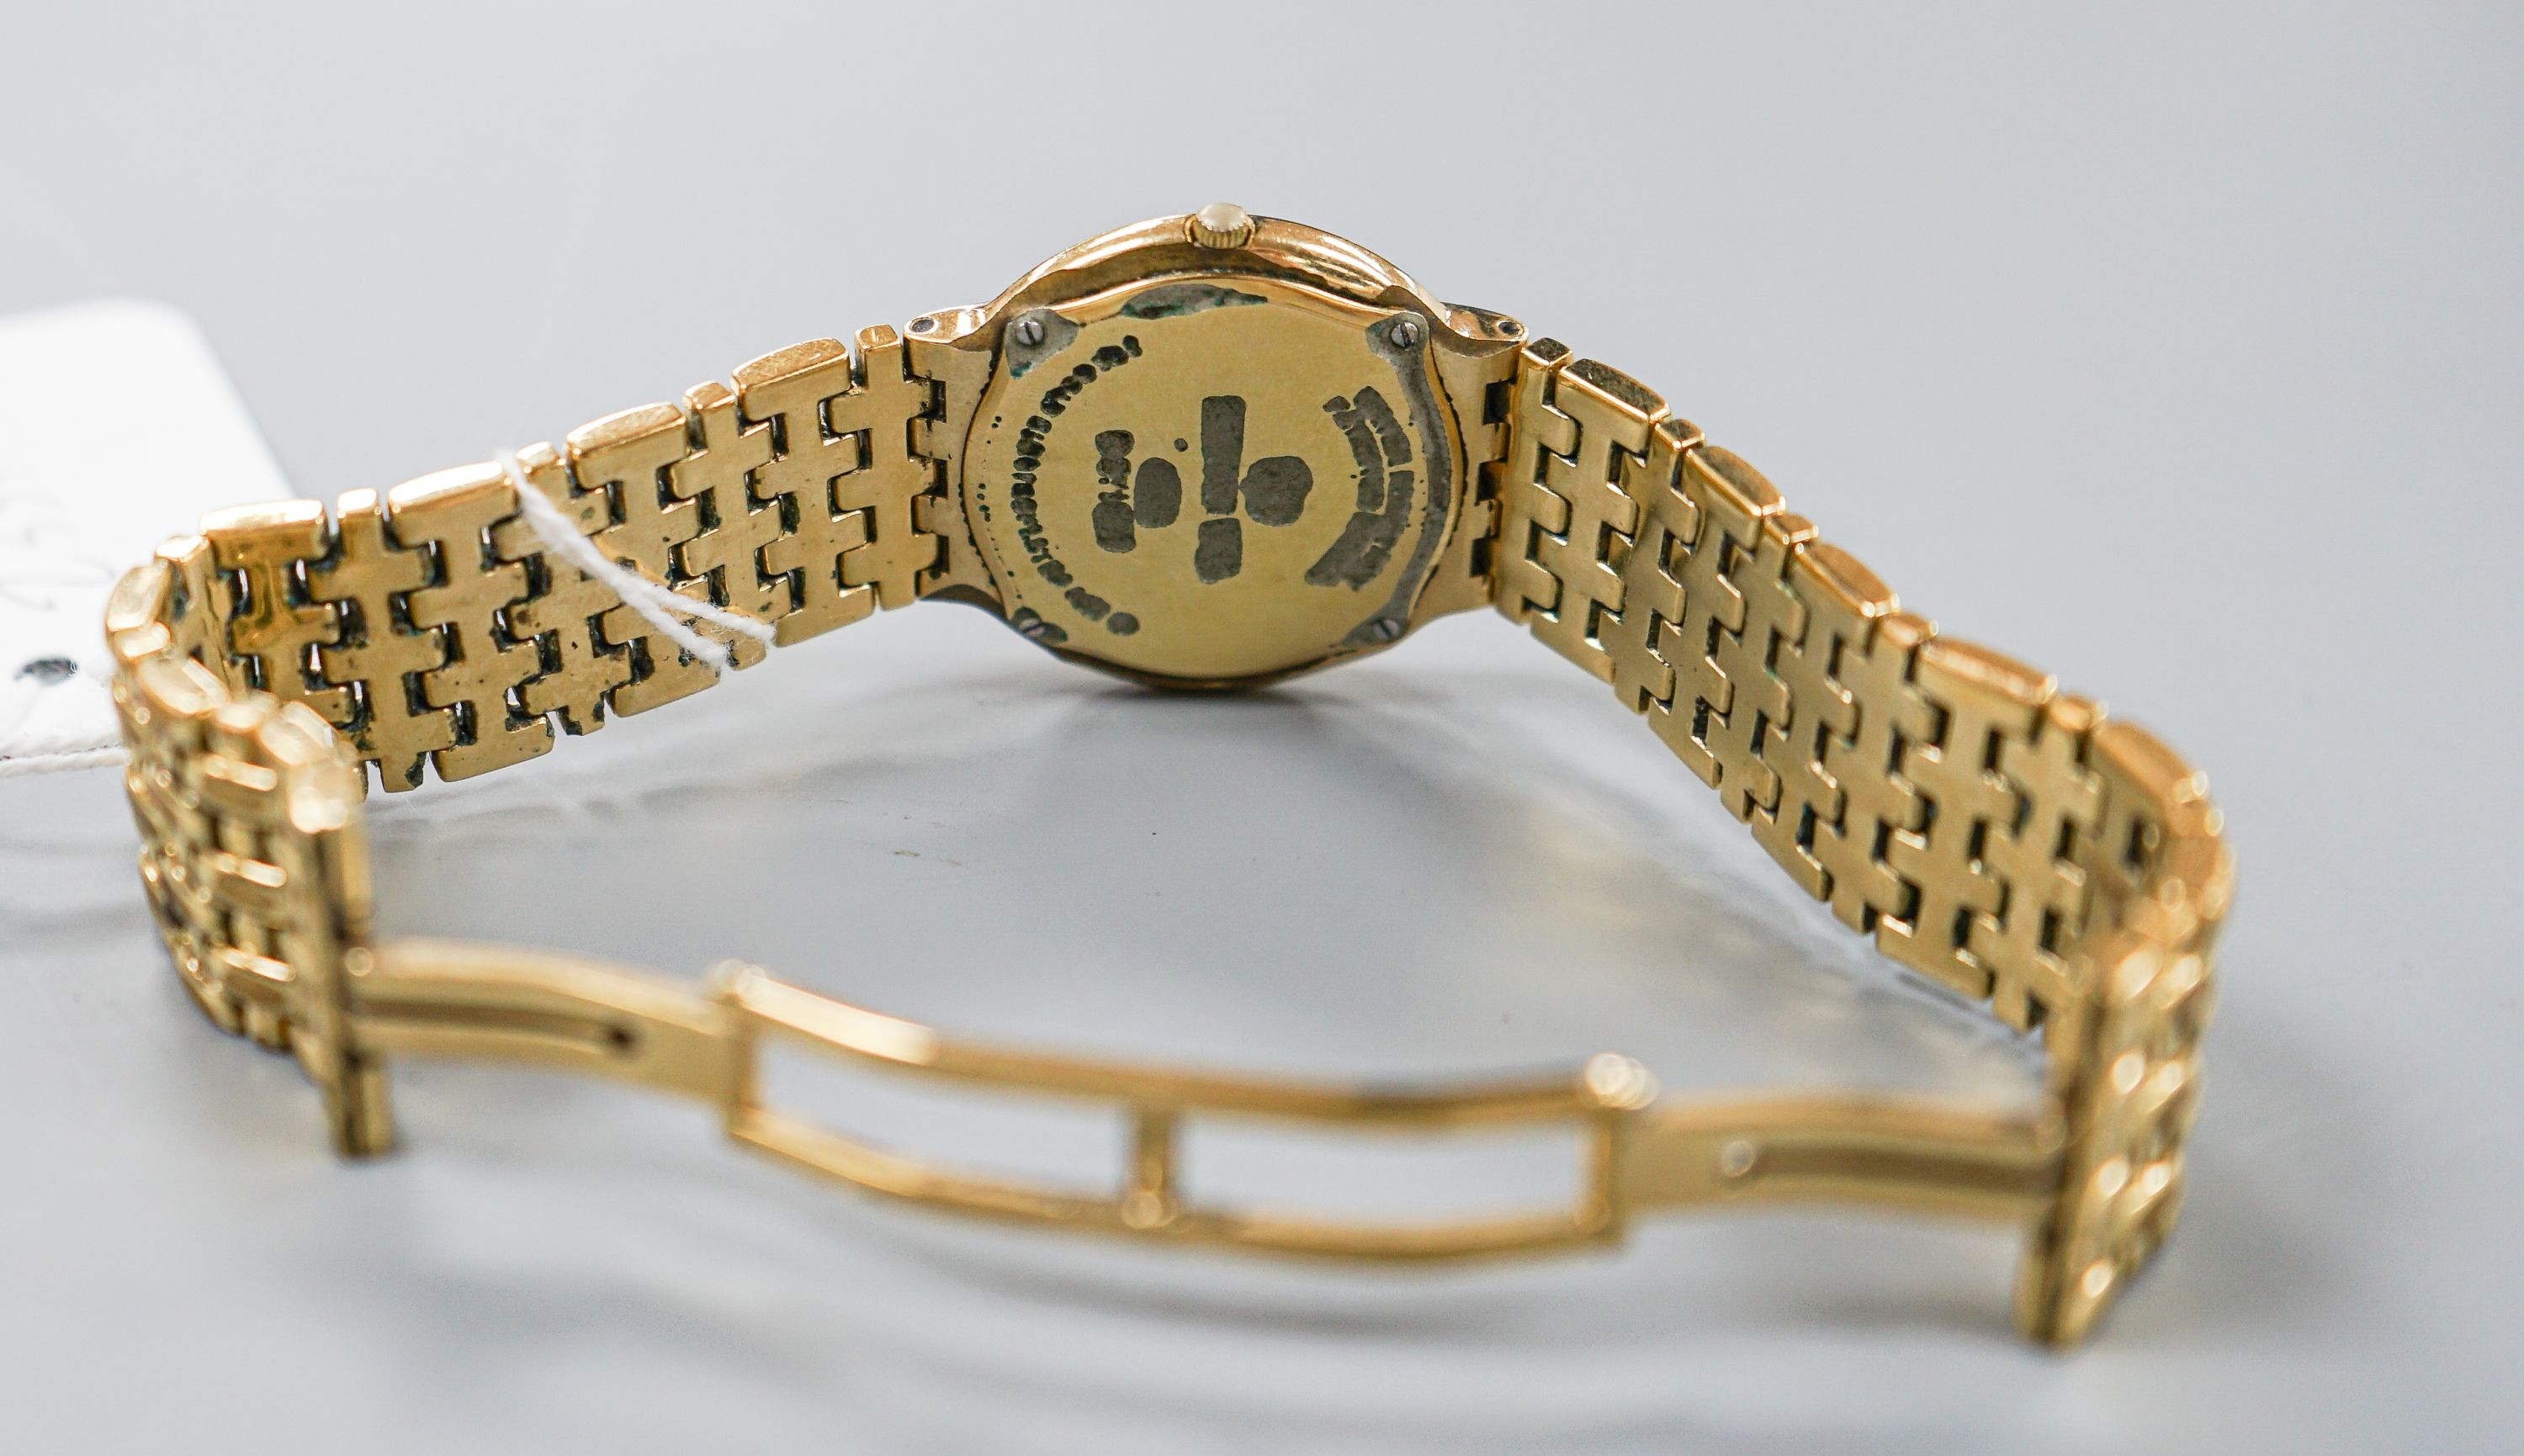 A gentleman's steel and gold plated Raymond Weil Fidelio quartz wrist watch (a.f.).